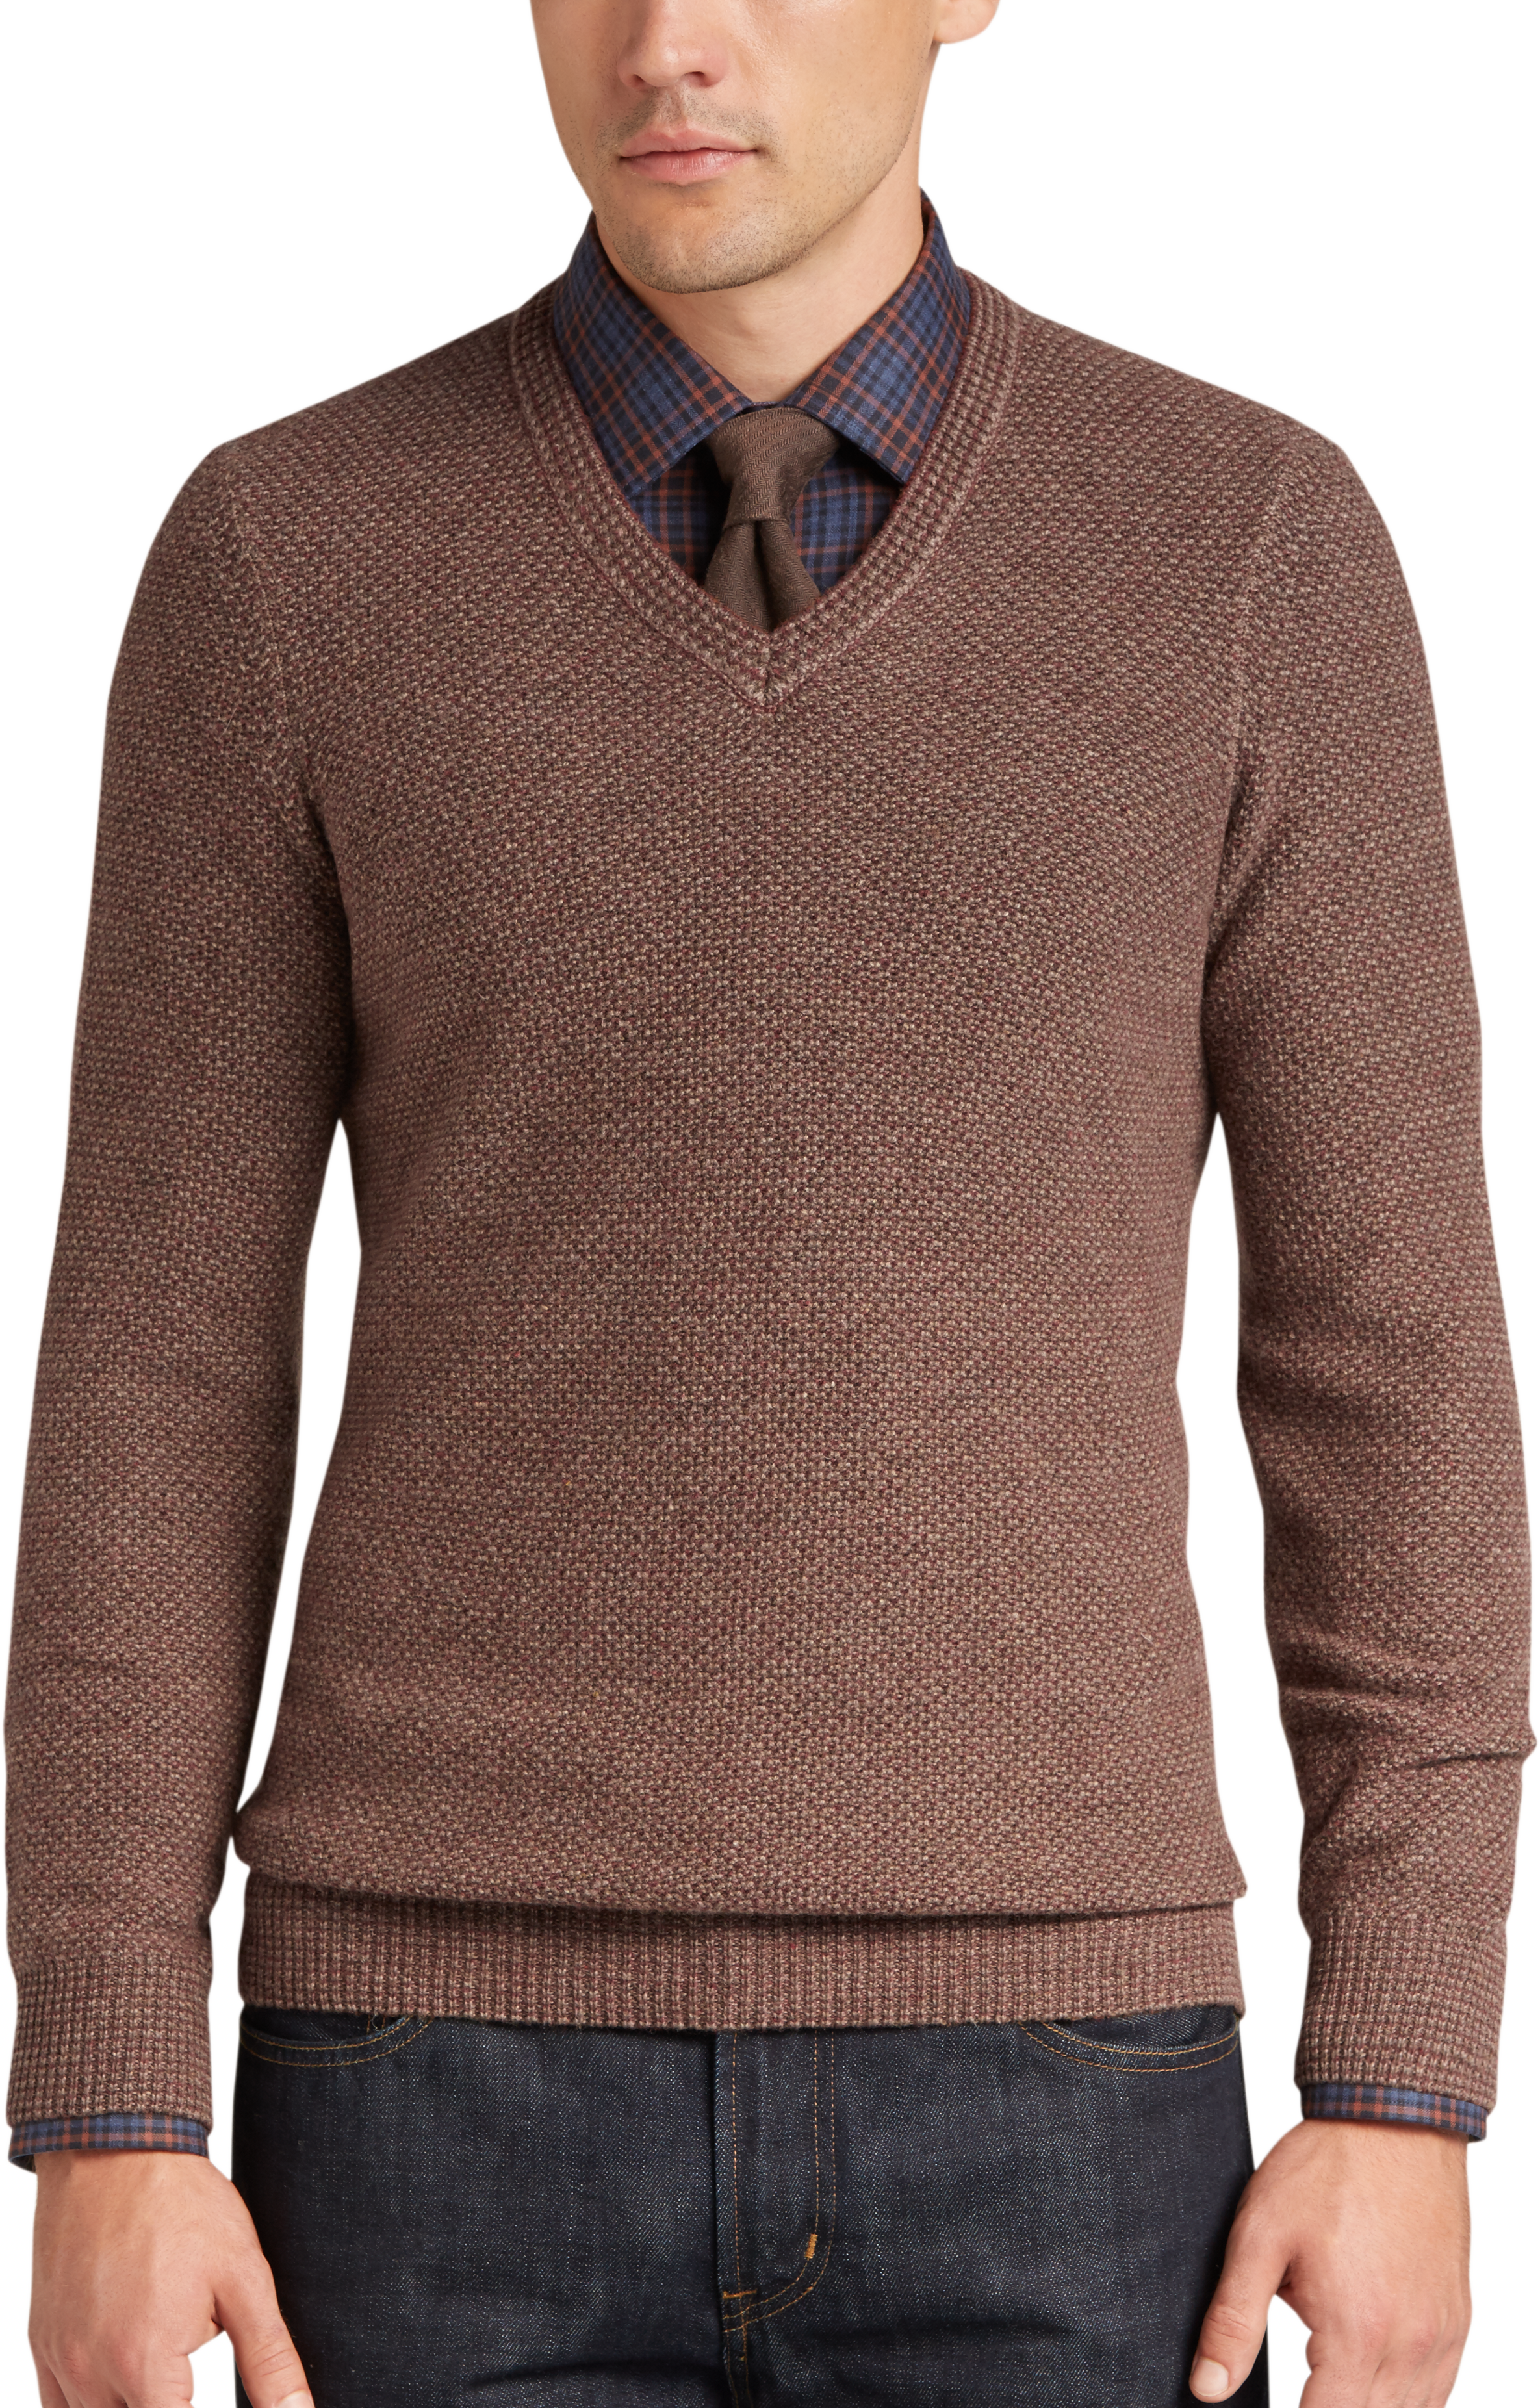 Joseph Abboud Rust V-Neck Sweater - Men's Sweaters | Men's Wearhouse